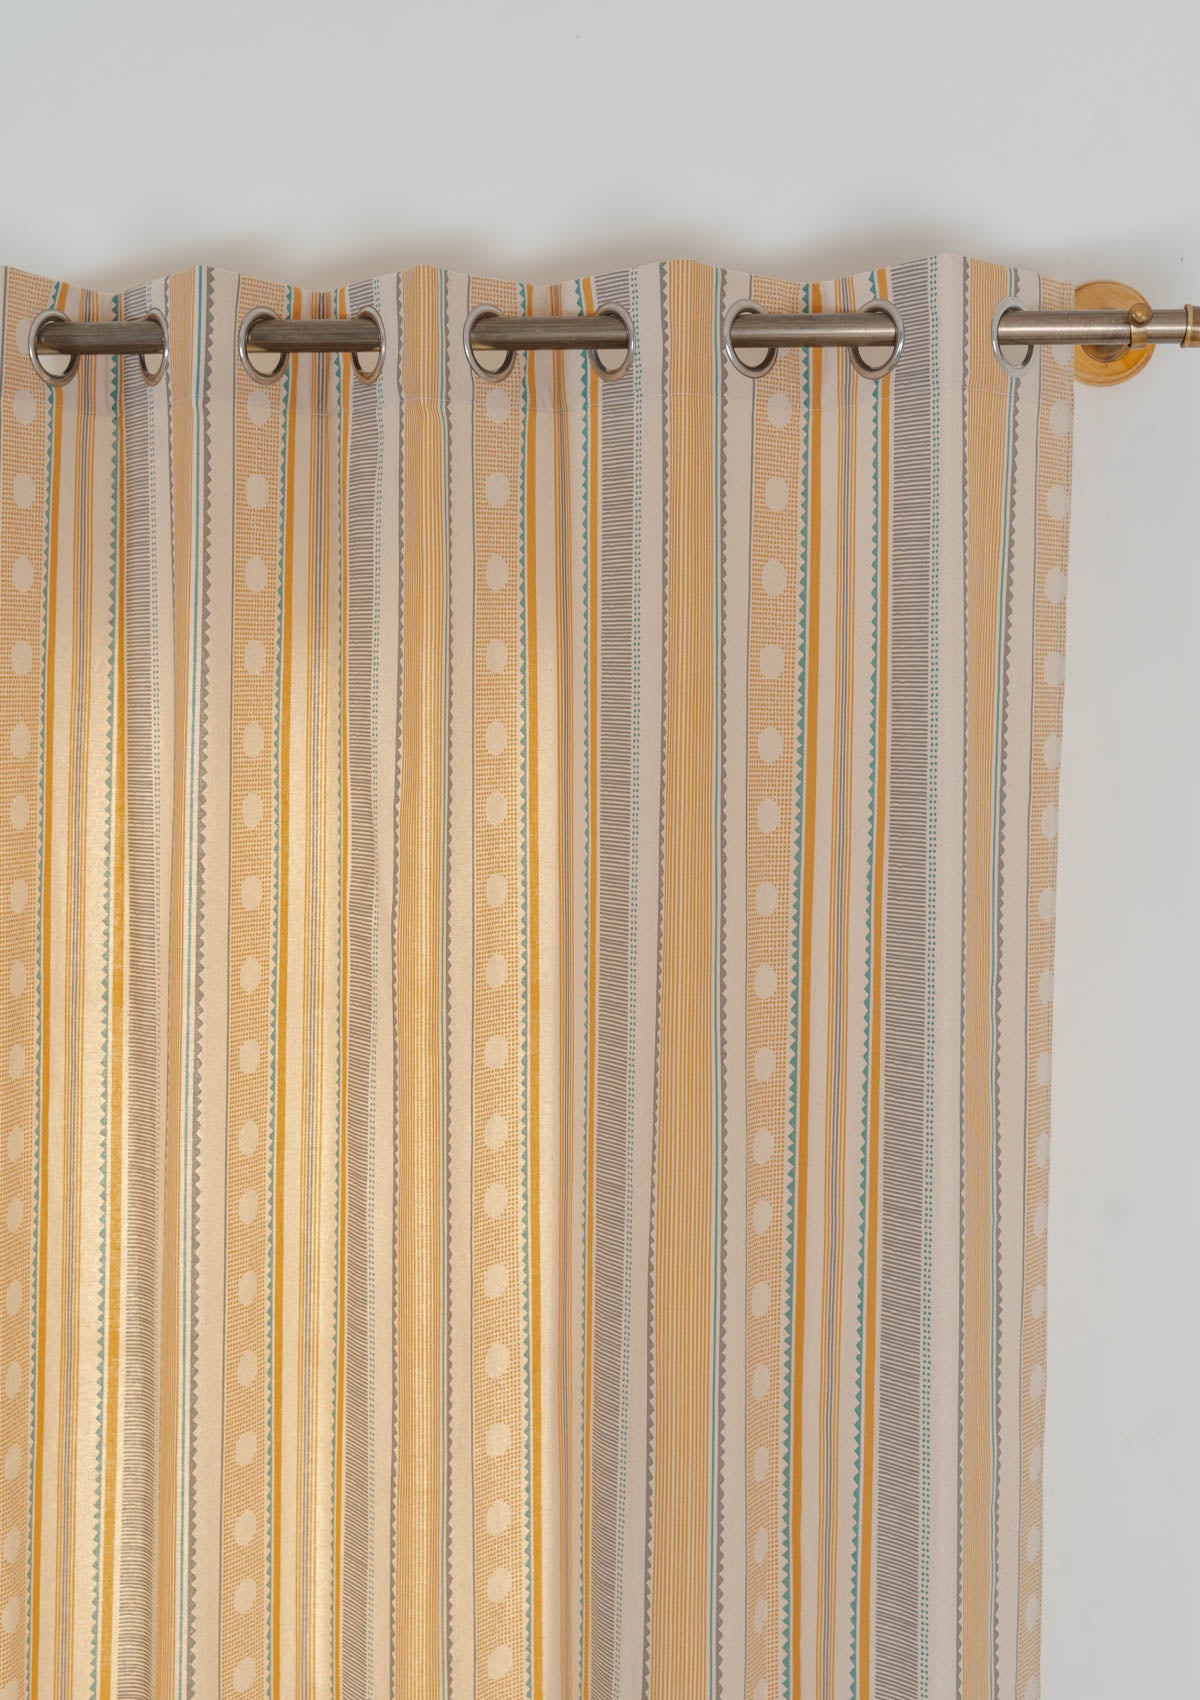 Buru 100% cotton boho curtain for living room - Room darkening - Mustard - Single - Pack of 1